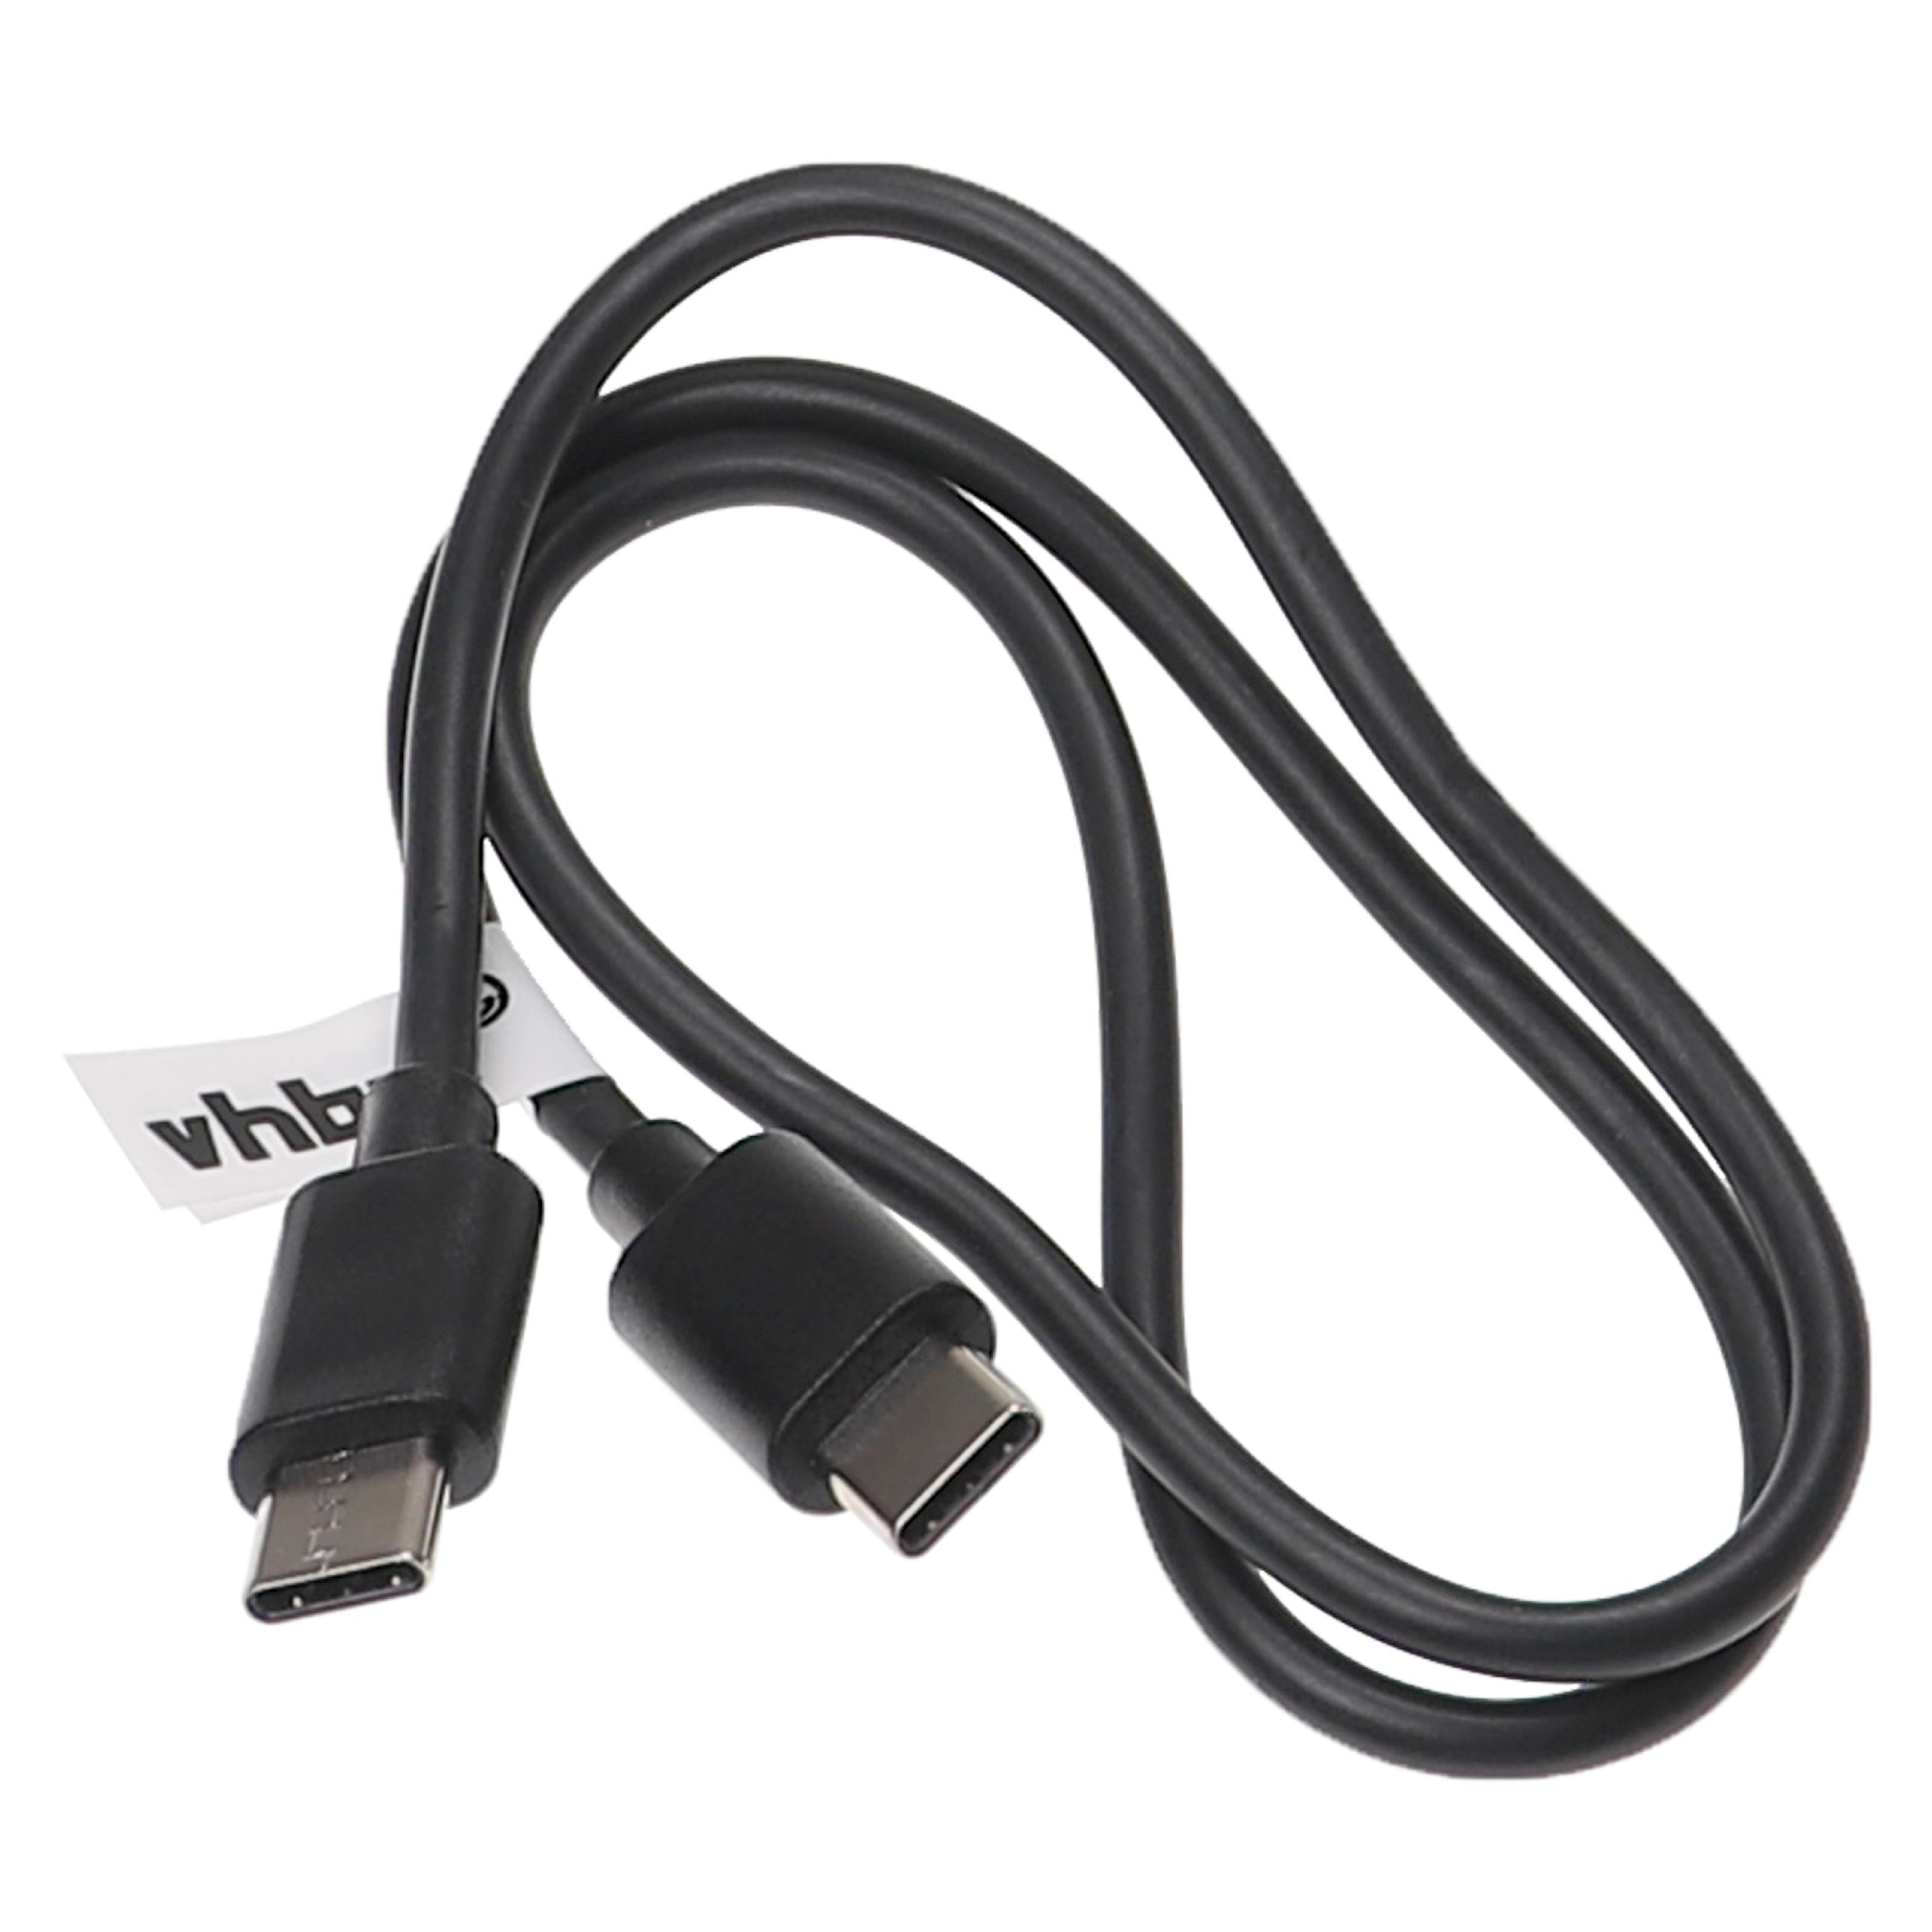 Kabel USB C do smartfona, laptopa, tabletu - 50 cm